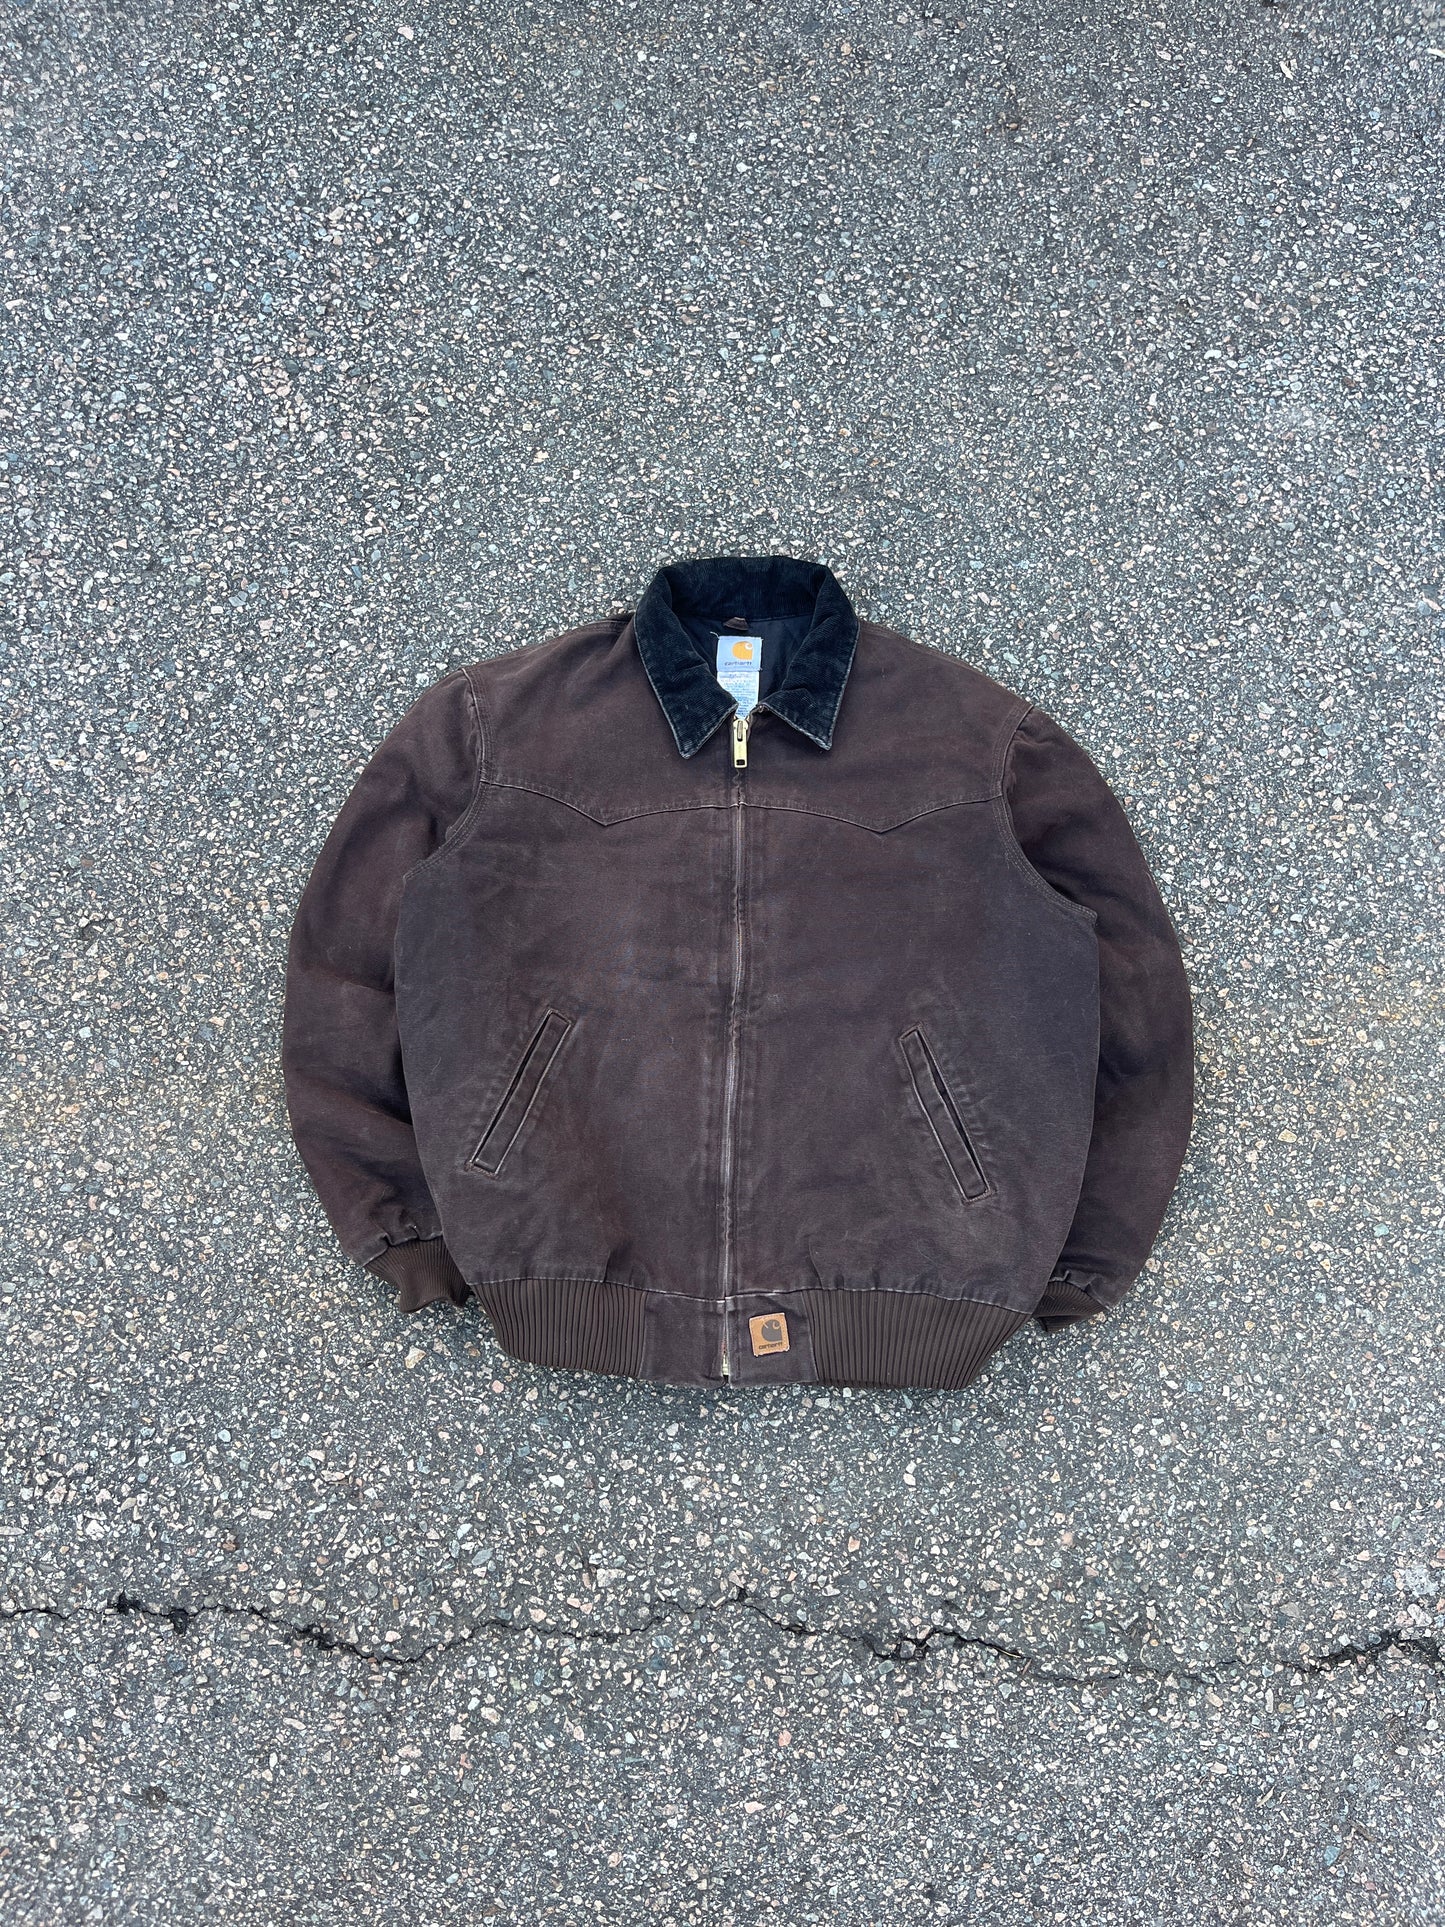 Faded Brown Carhartt Santa Fe Jacket - XL